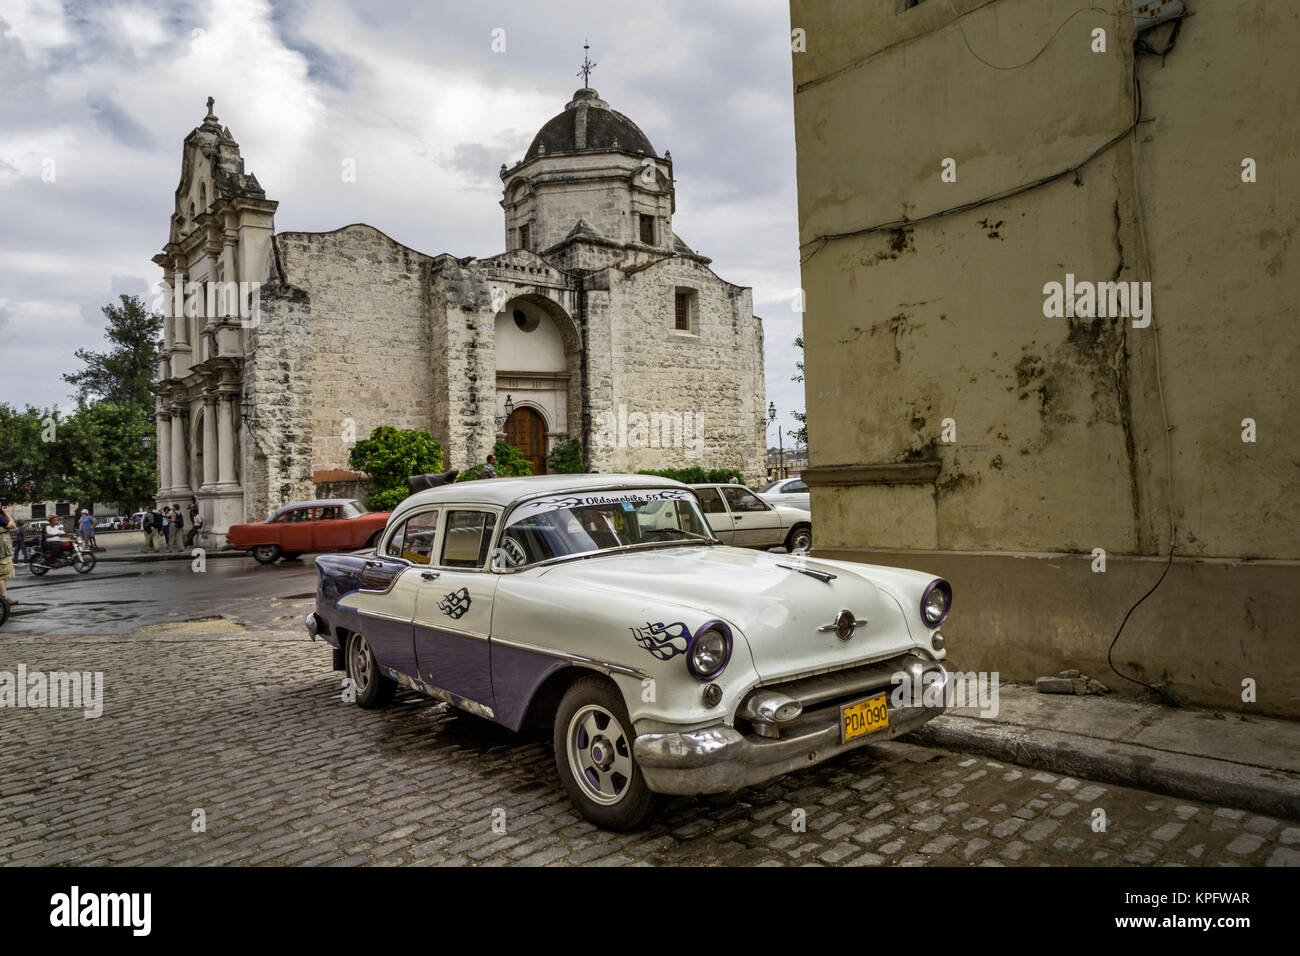 1950's era antique car and street scene from Old Havana, Havana, Cuba Stock Photo